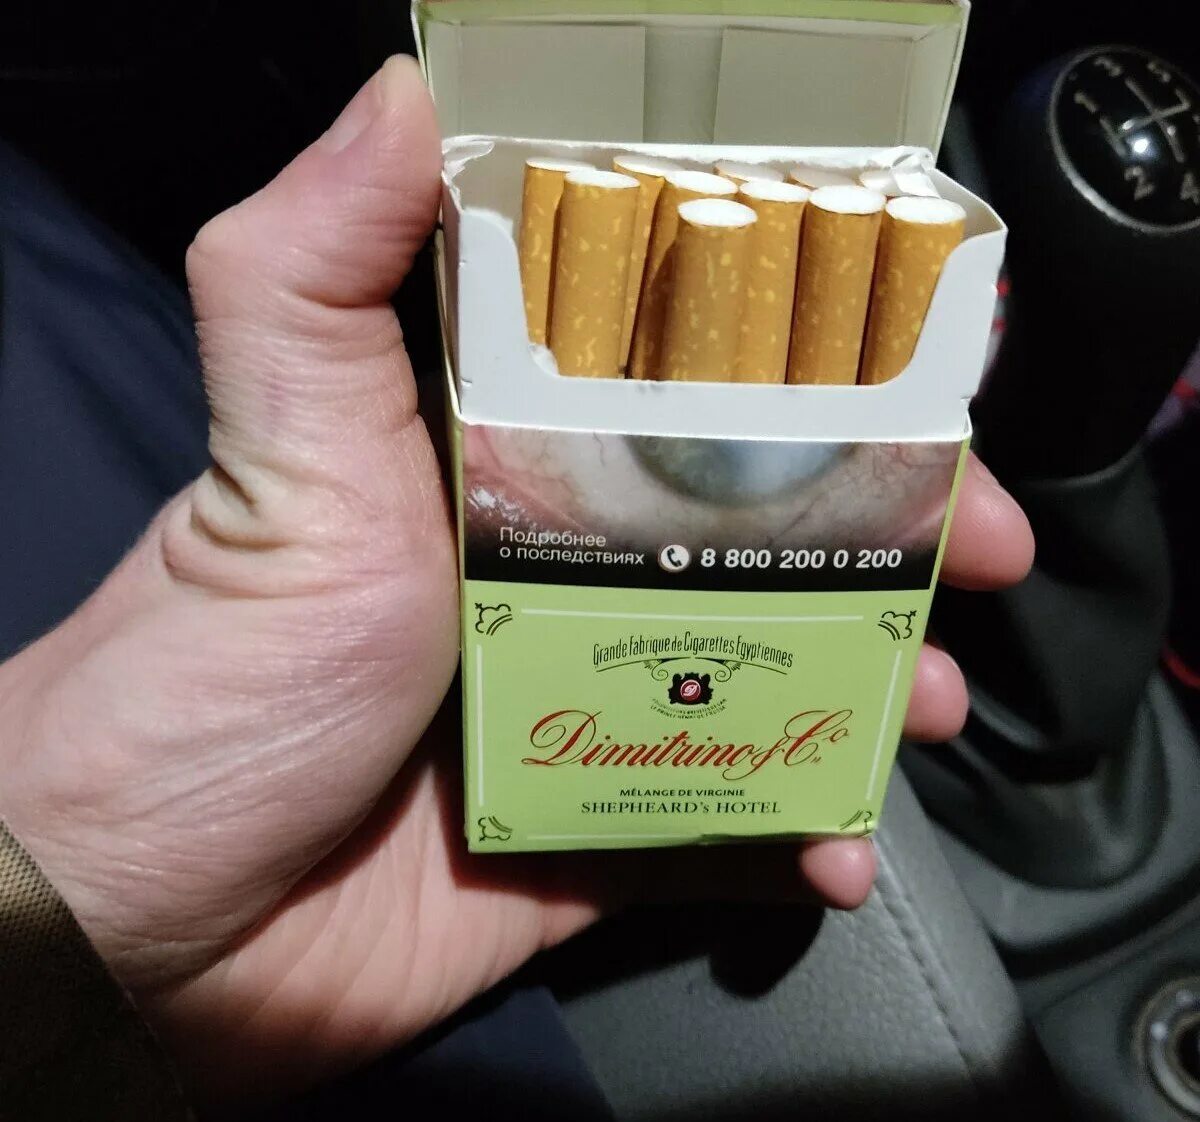 Сигареты димитрино. Сигареты Dimitrino Shepheard's Hotel. Марки сигарет. Табачные бренды. Российские сигареты марки.